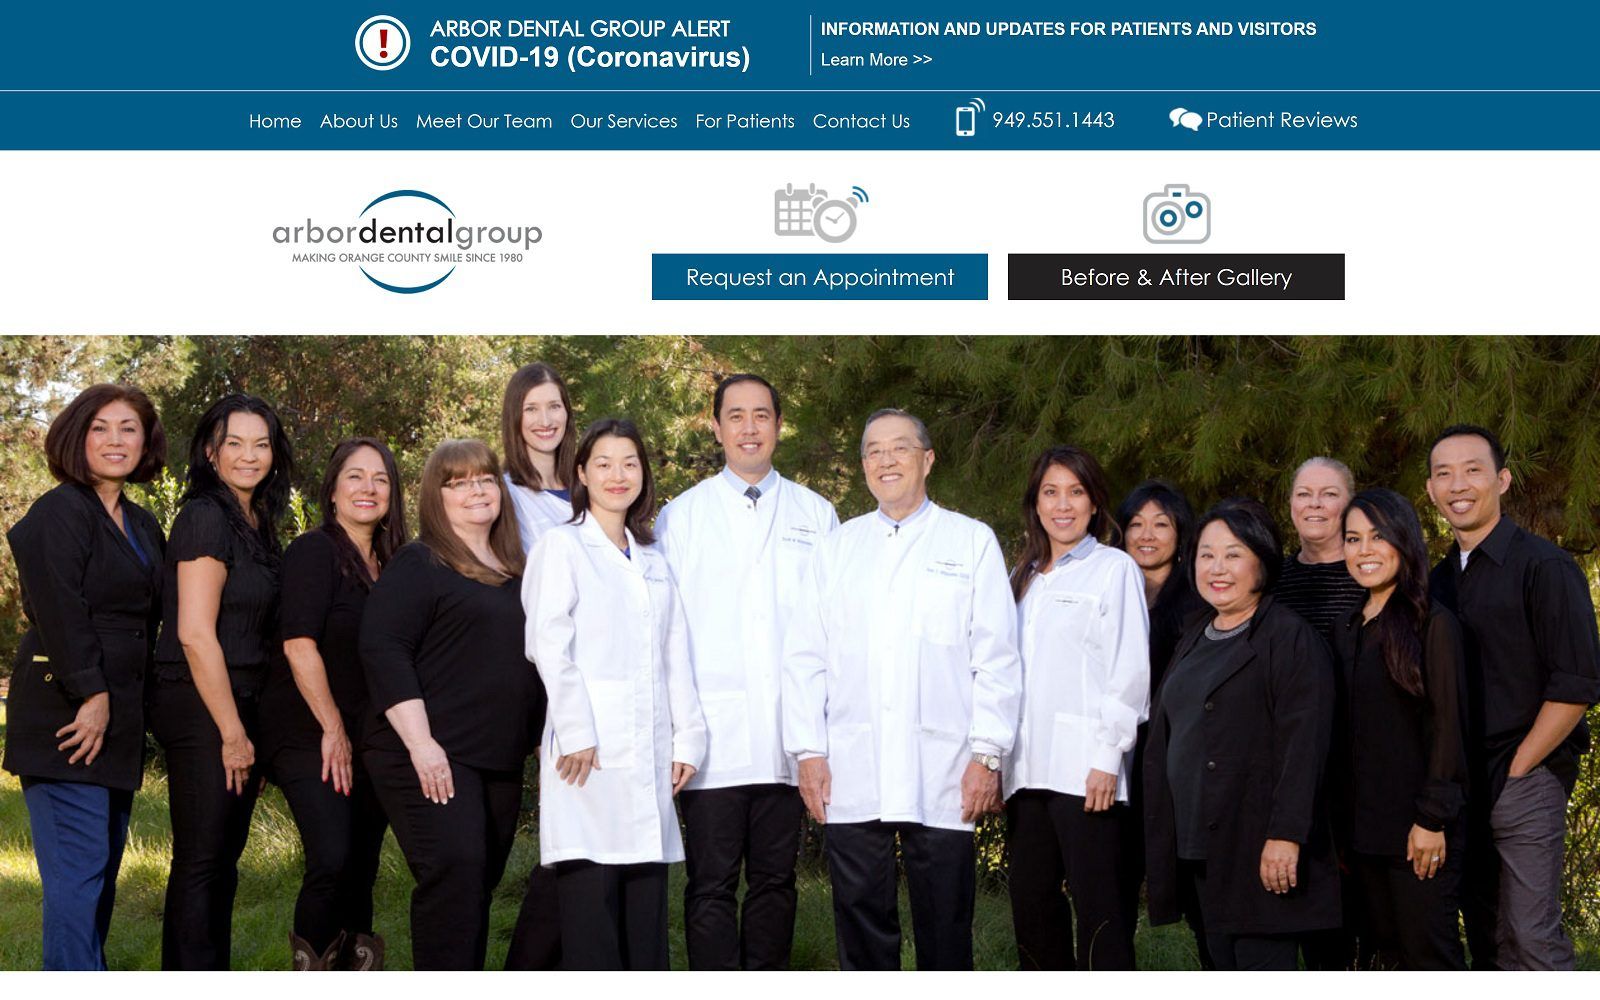 The screenshot of the arbor dental group website